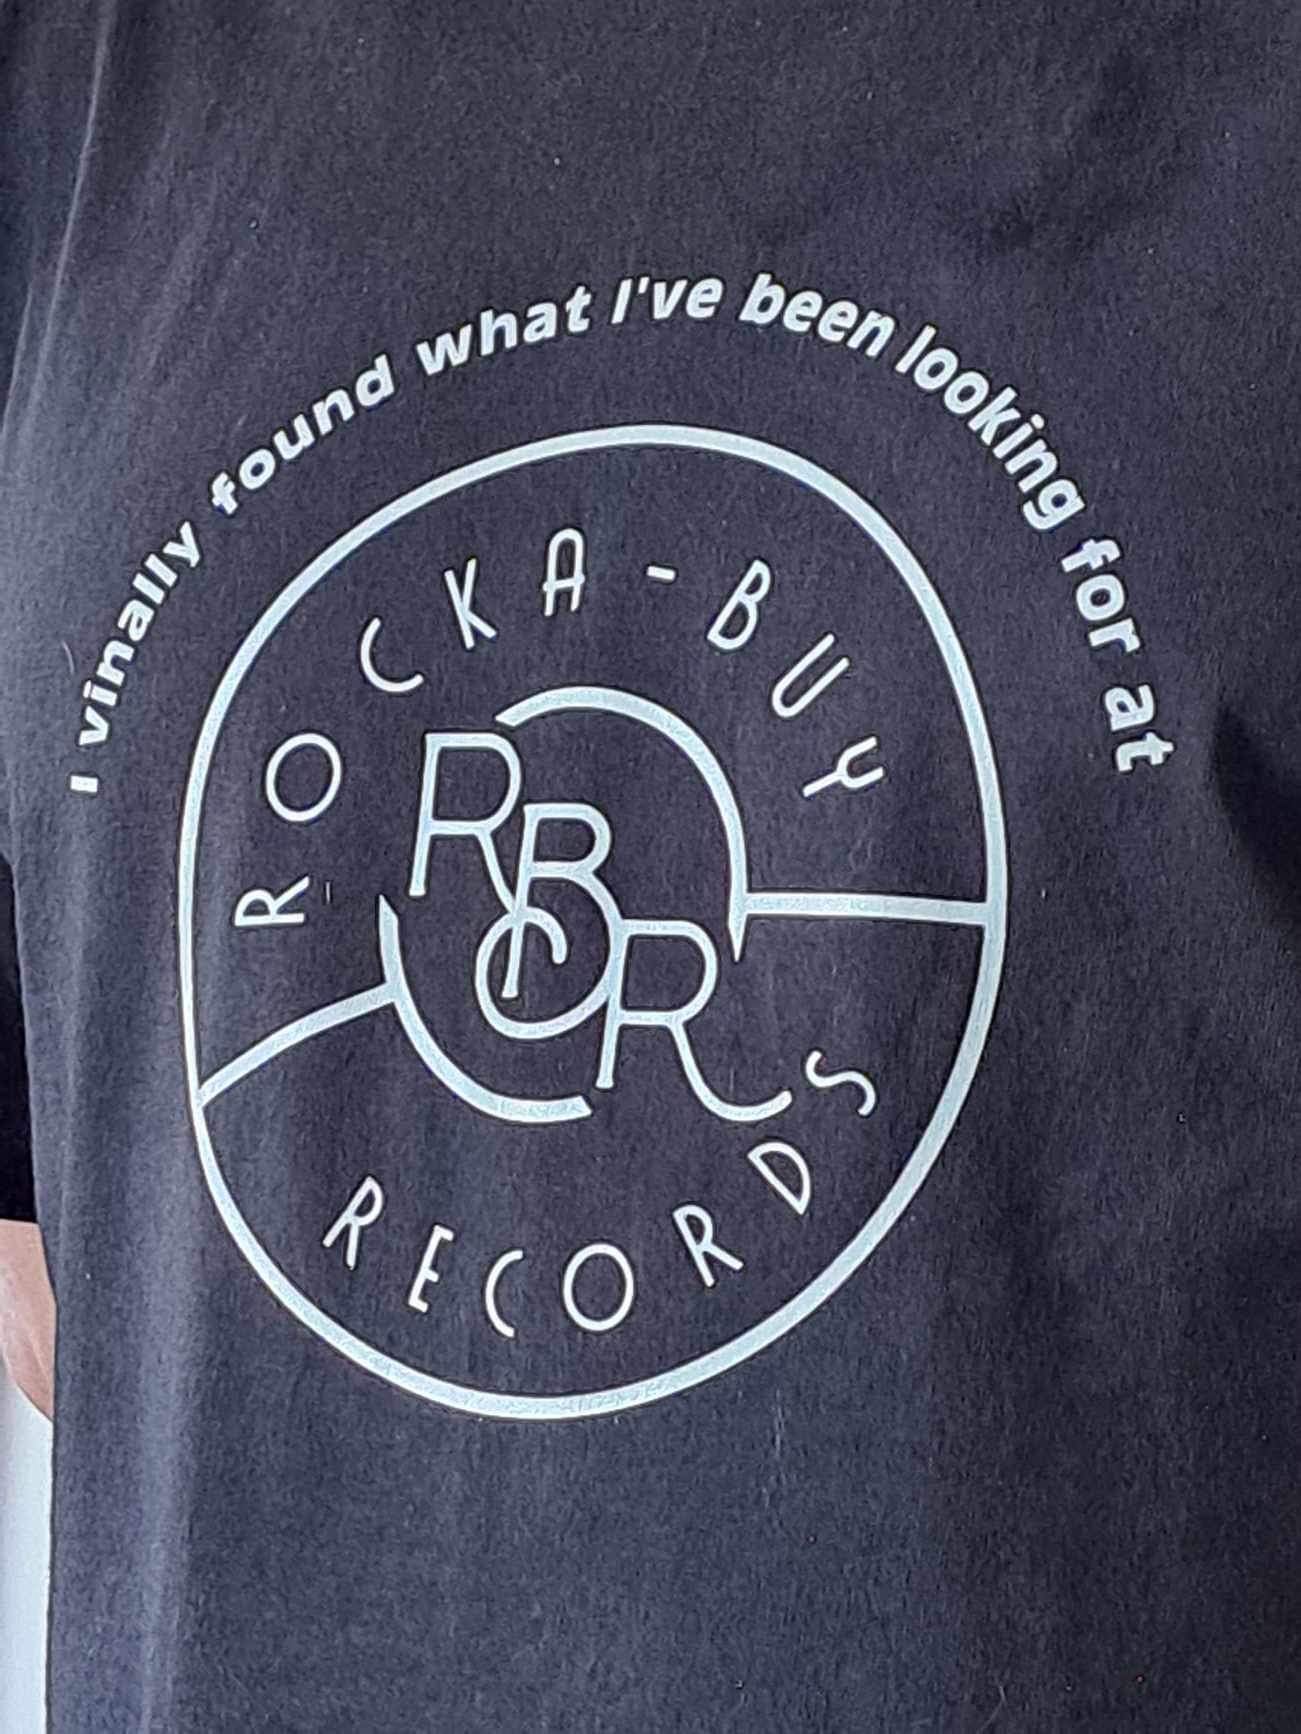 Vinally Found Rocka-Buy T shirt